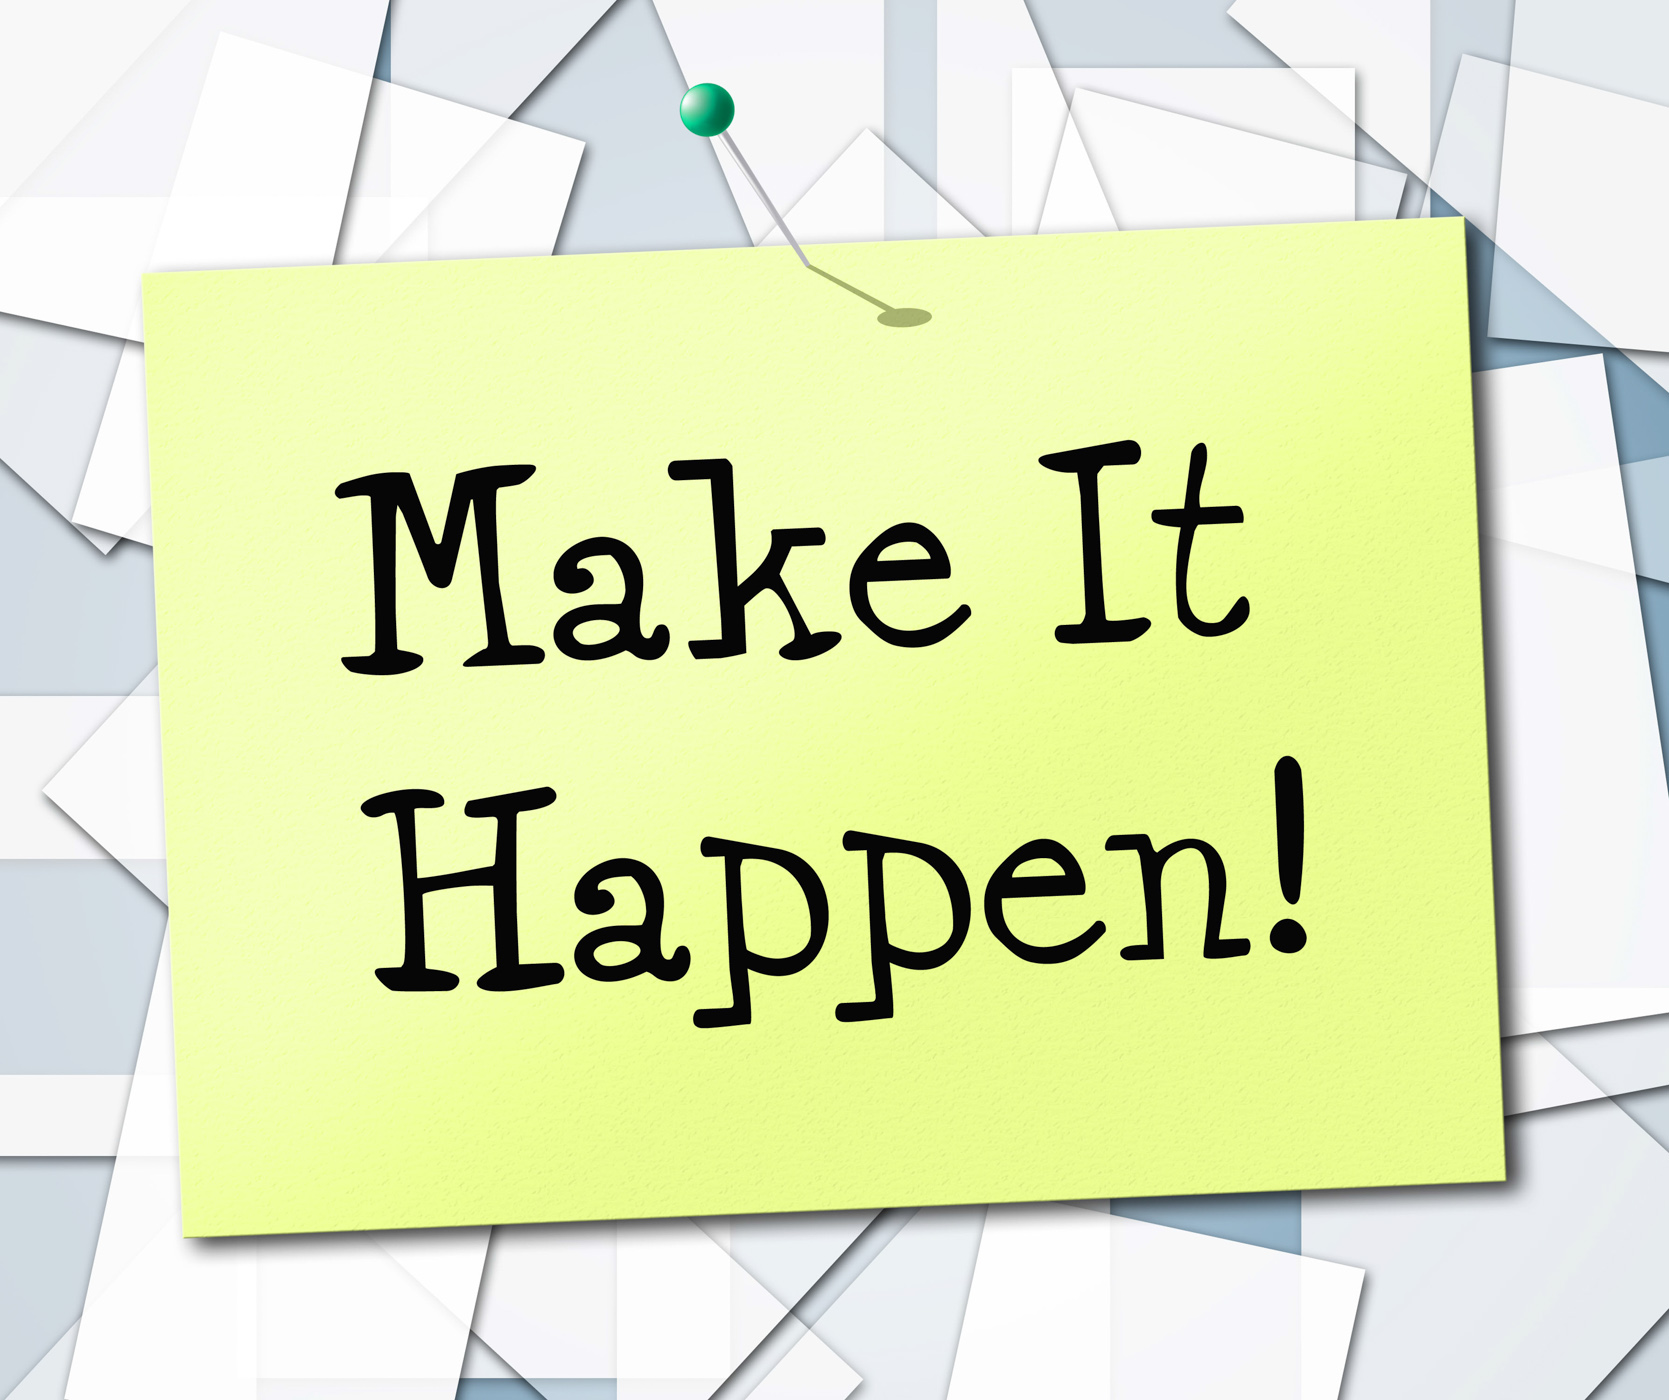 Make it happen represents motivating progression and encourage photo